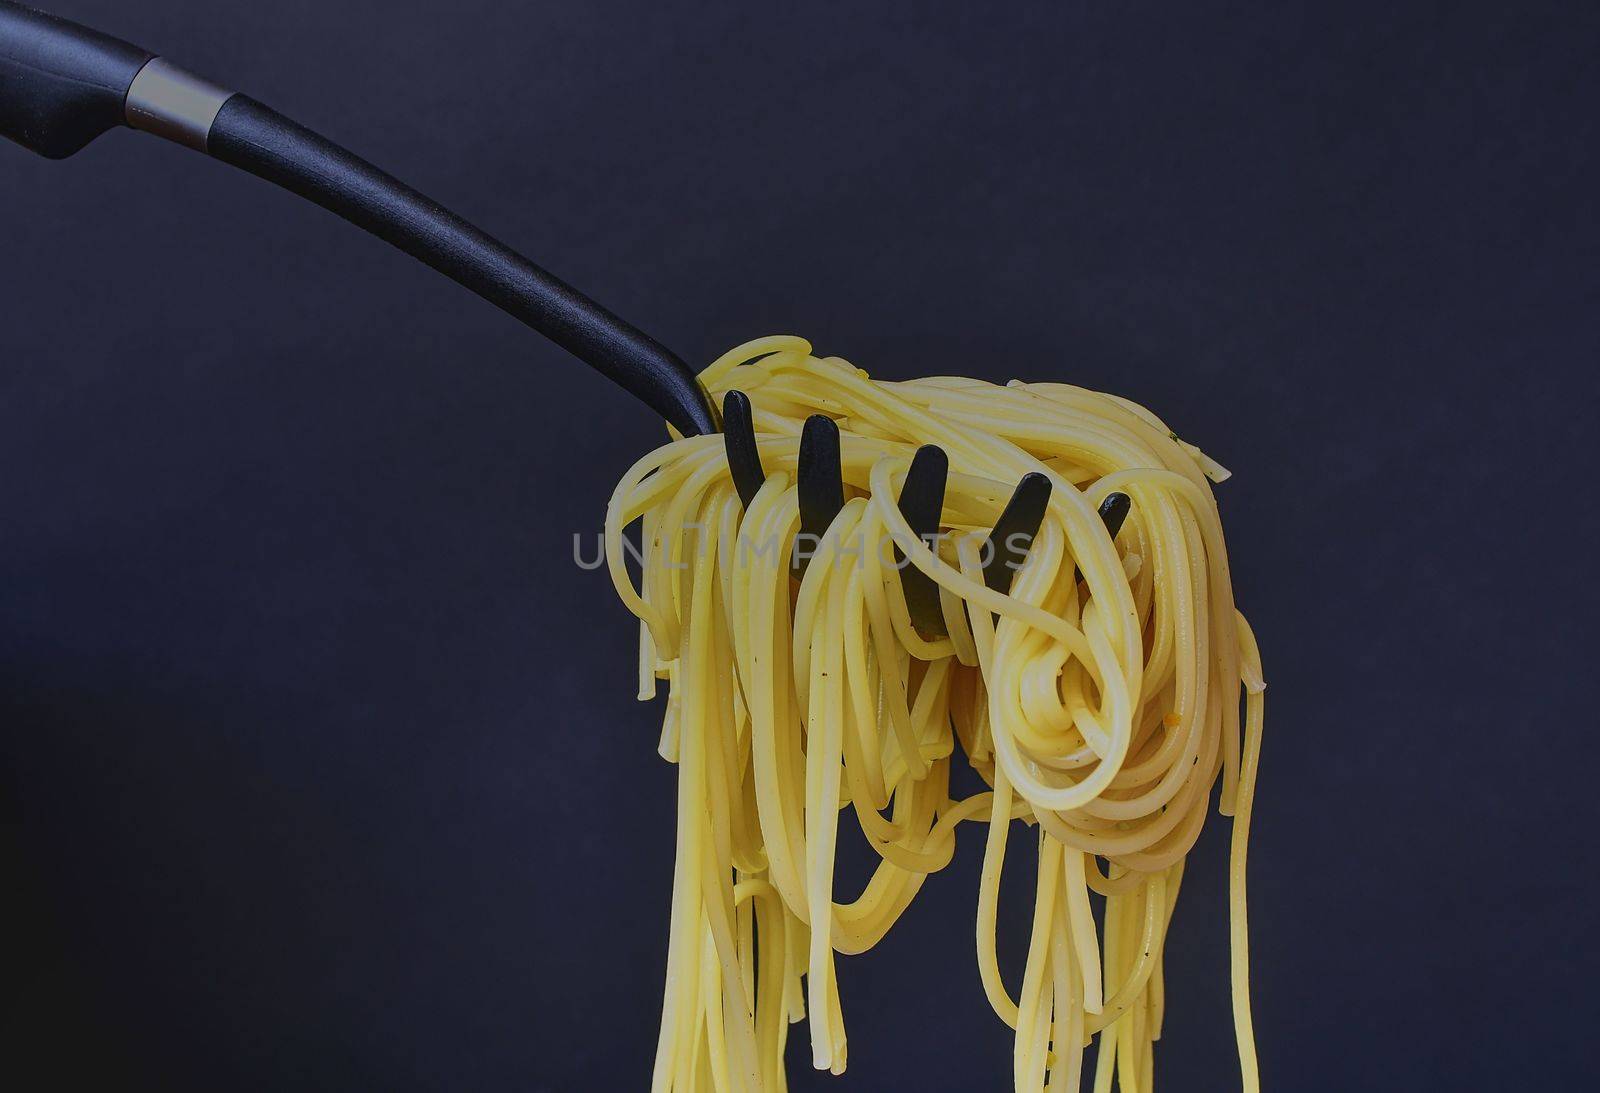 Cooked spaghetti on spaghetti spoon. Spaghetti on black background. Close-up. Dark food photo. Copy space by roman_nerud